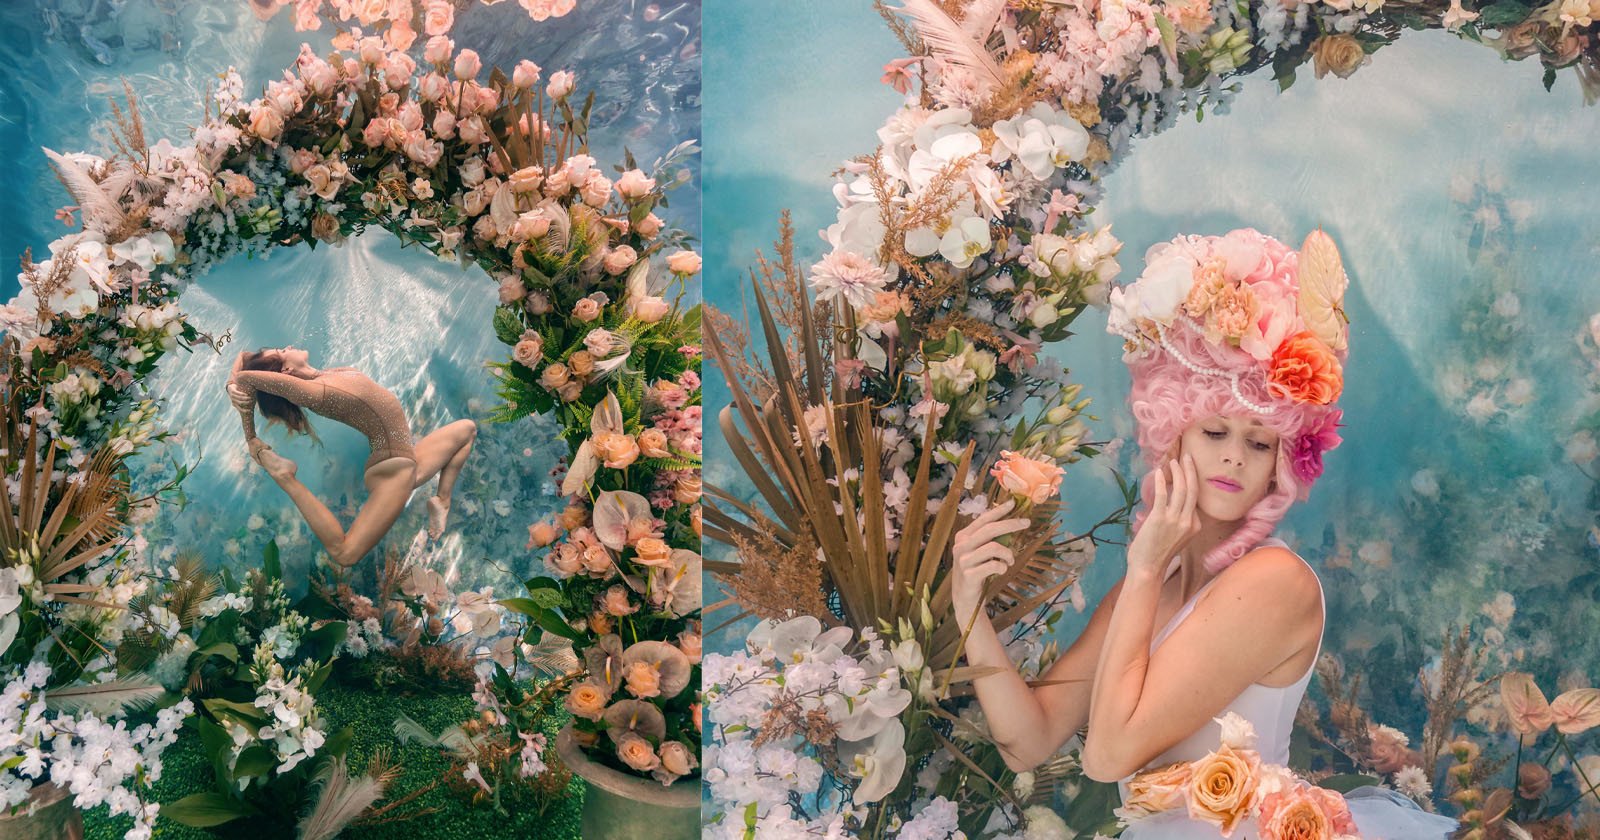  gorgeous underwater garden photo shoot bridgerton meets coral 